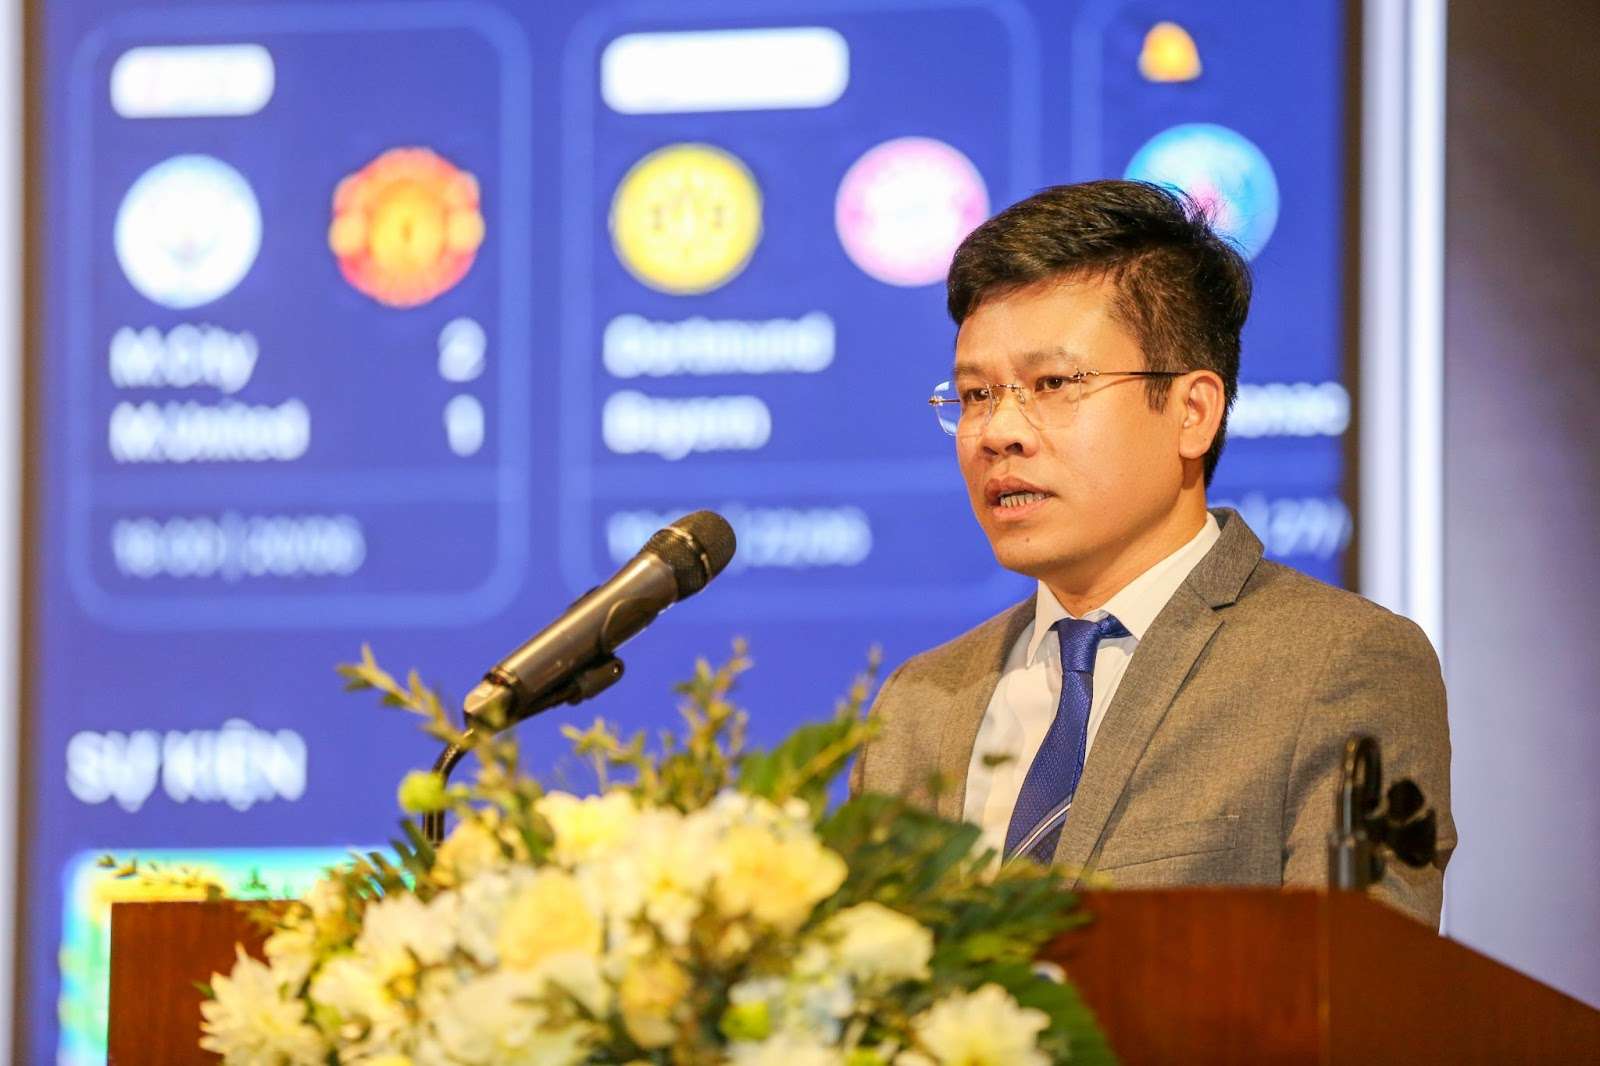 Mr. Bui Huy Nam – General Director of VTVcab